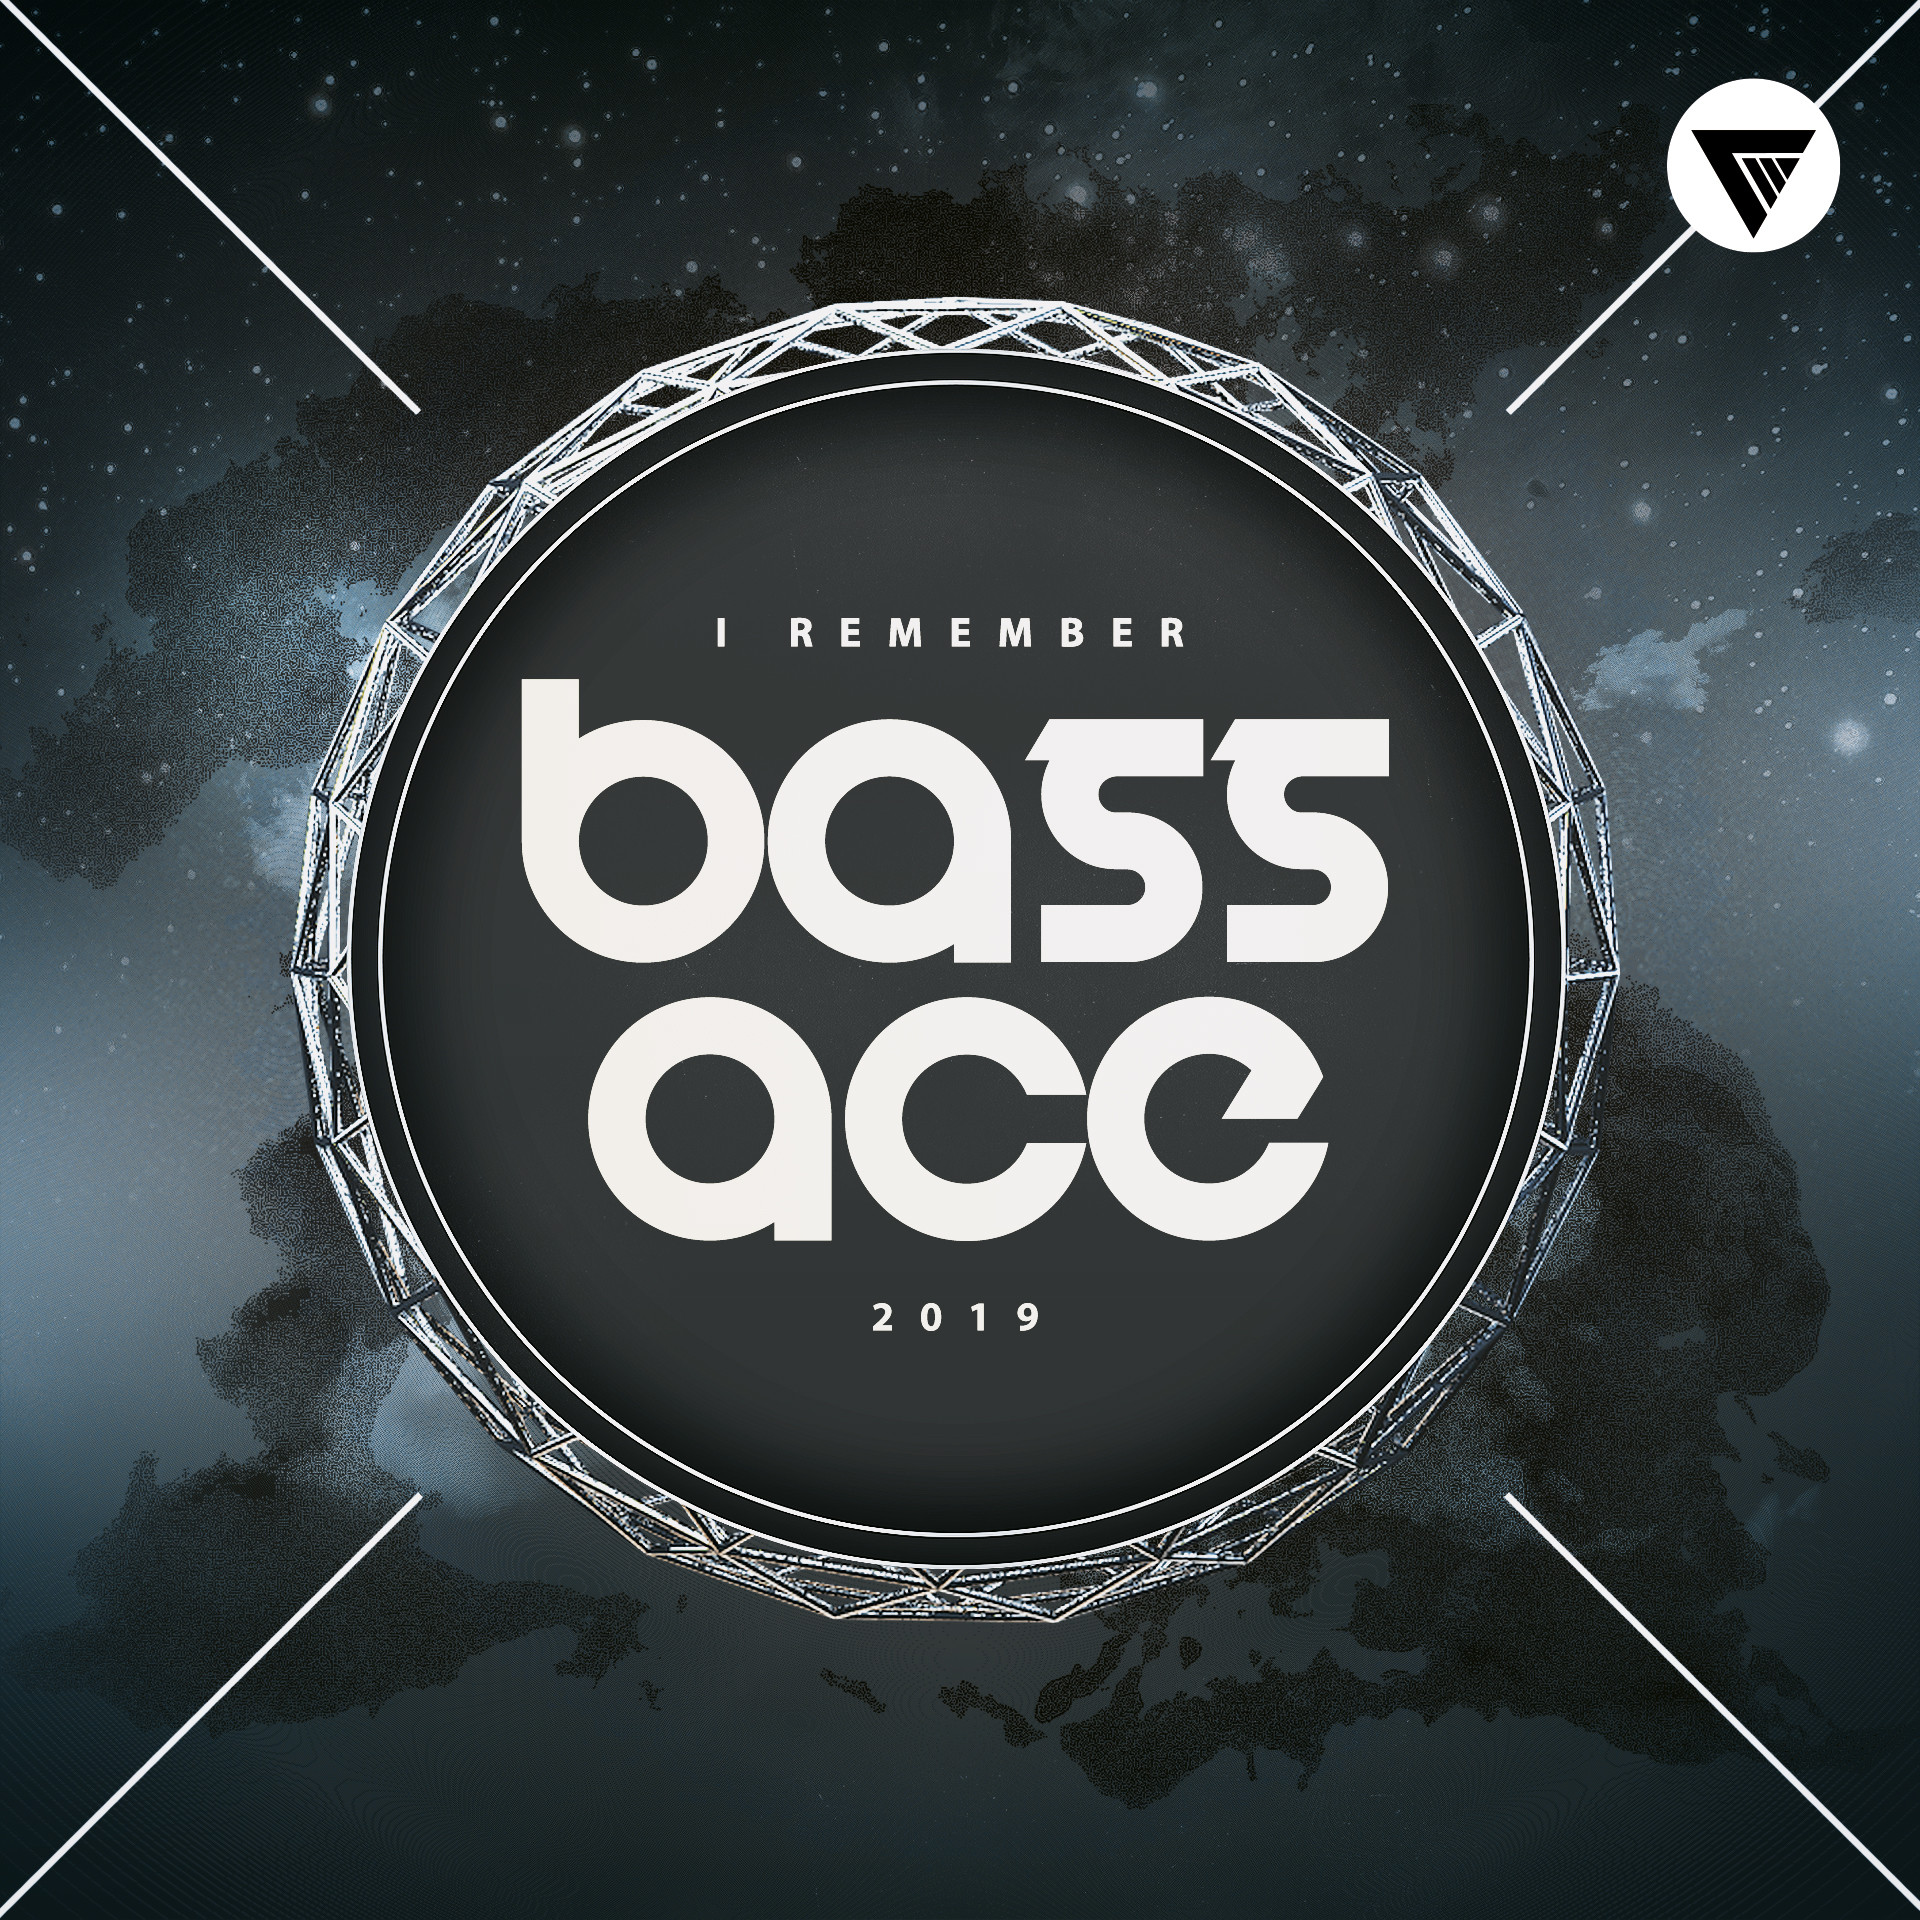 Bass ace. Rain Bass Ace. B1.28 Ace-Bass. Coming on Radio Edit Bass Ace.